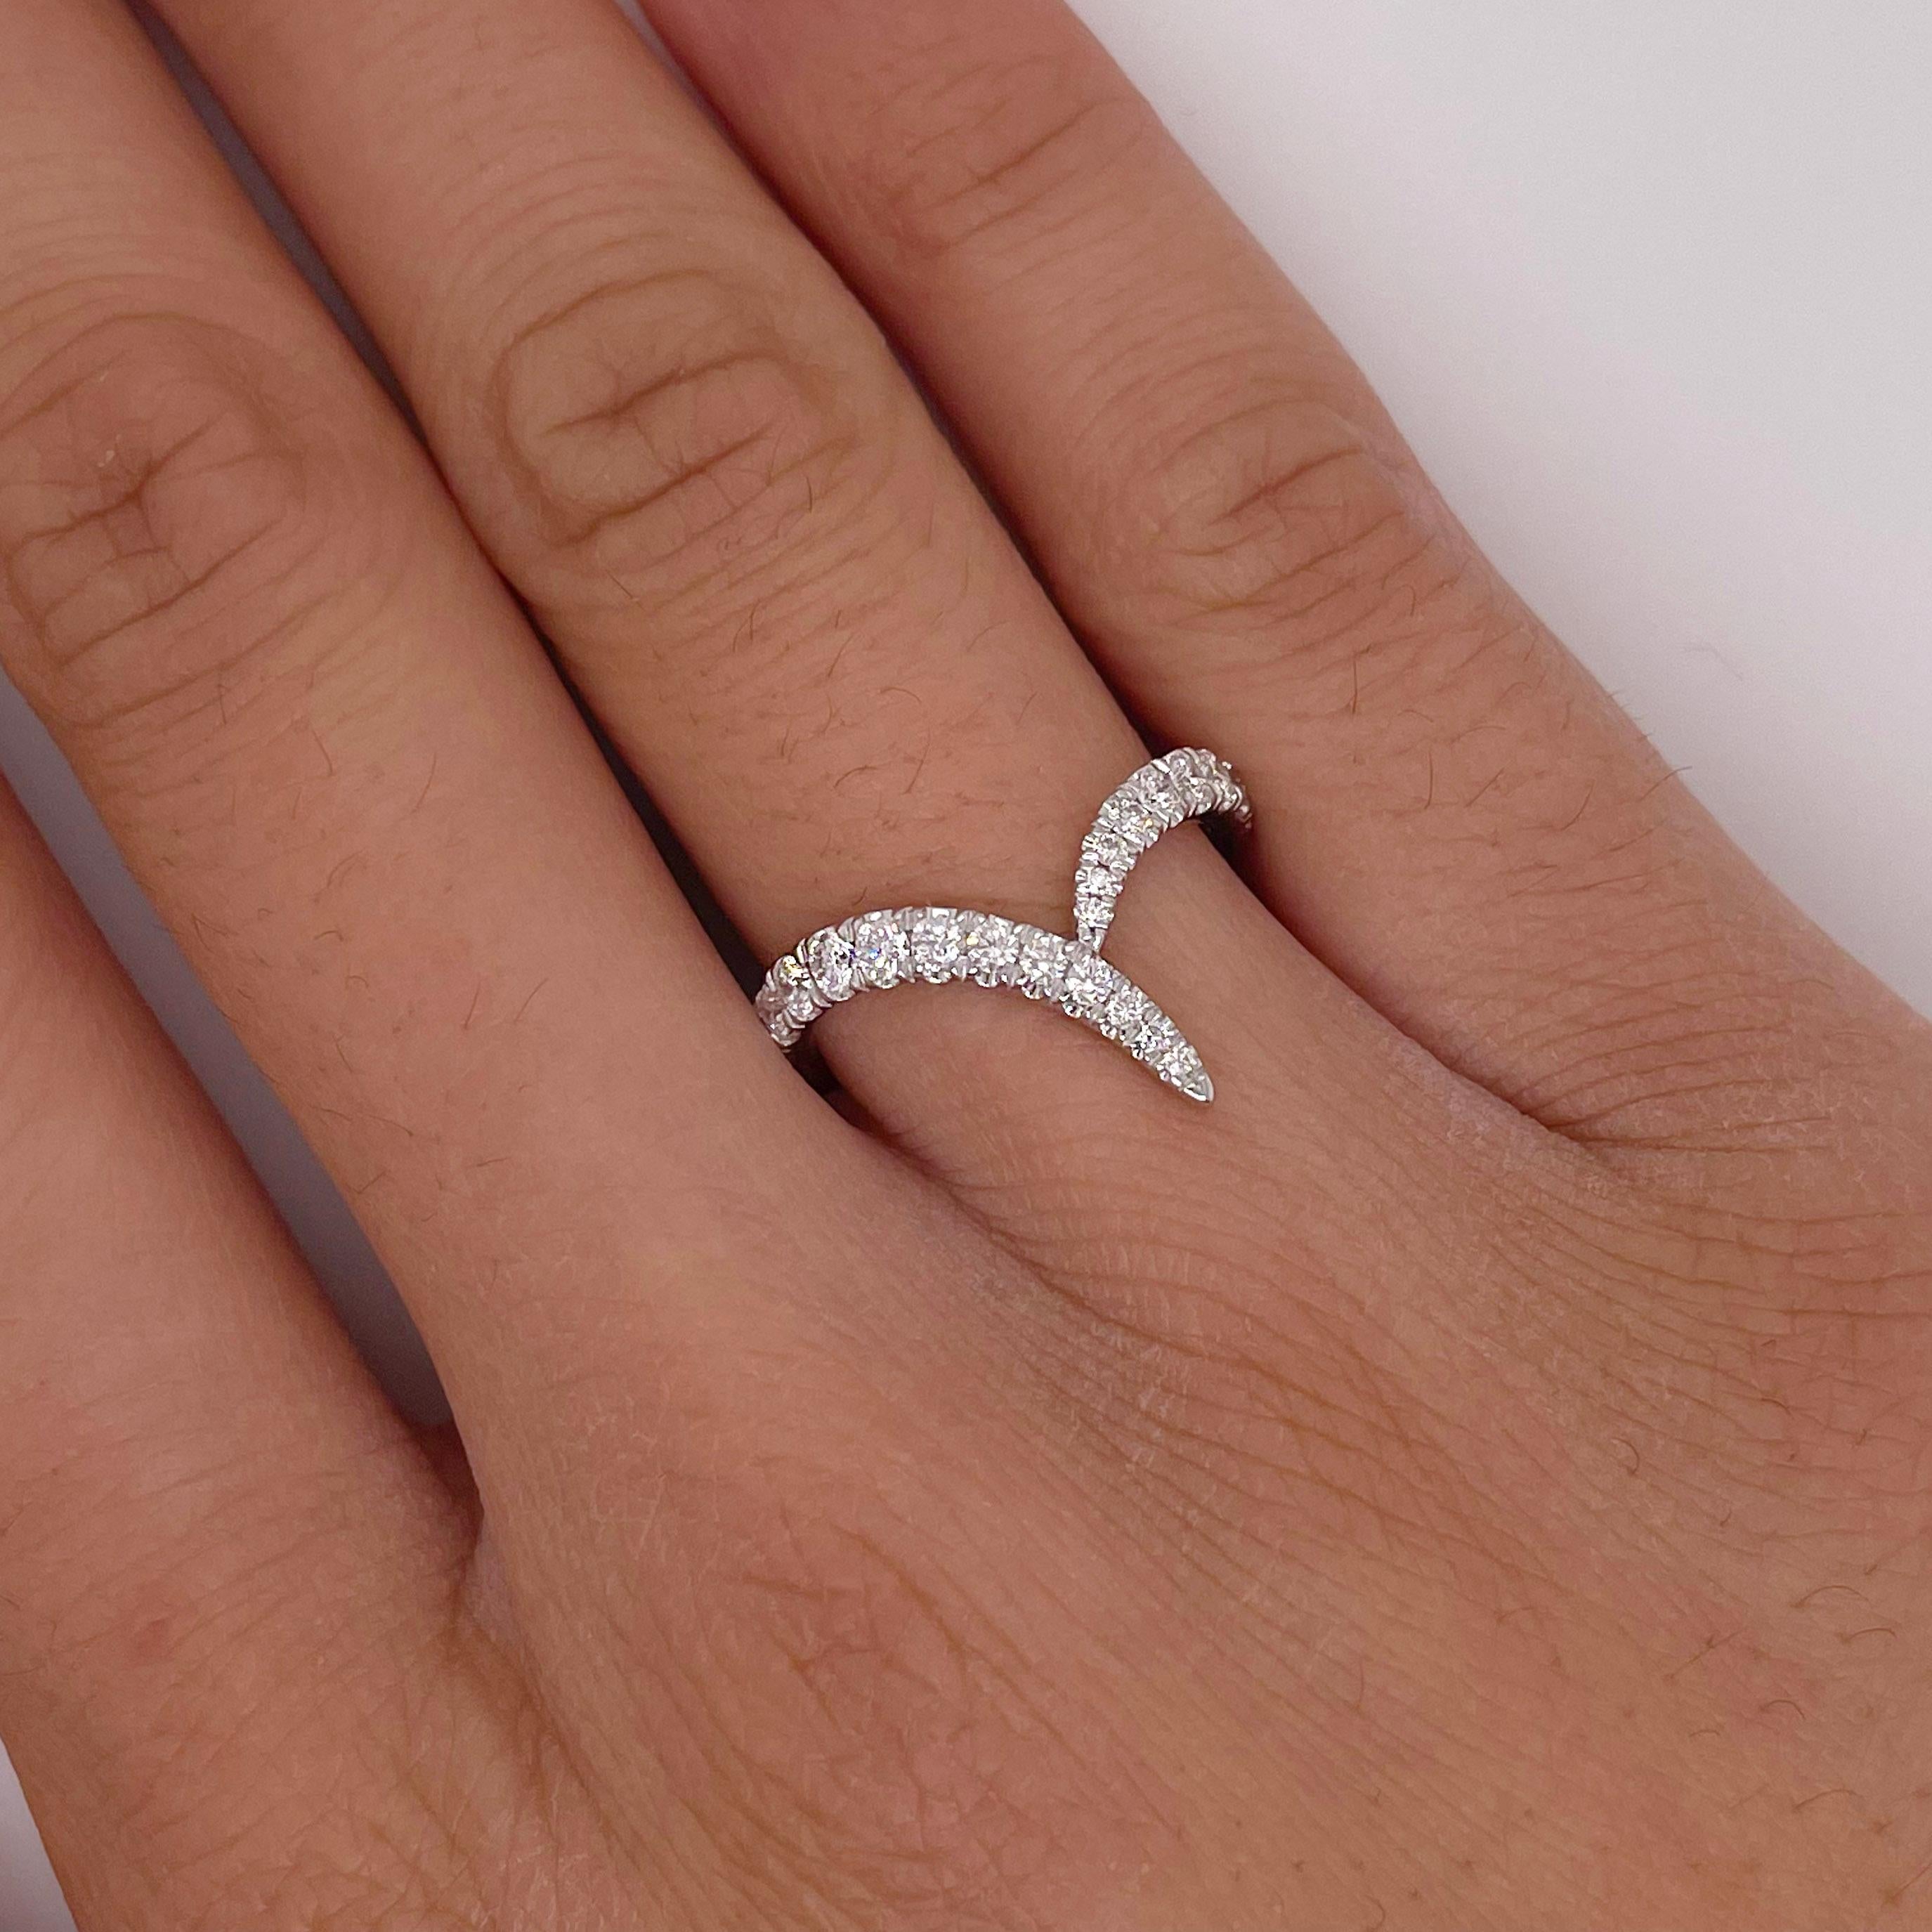 For Sale:  V Diamond Band Ring 14K White Gold, 20 Diamonds in Iconic Design, Wedding Band 4